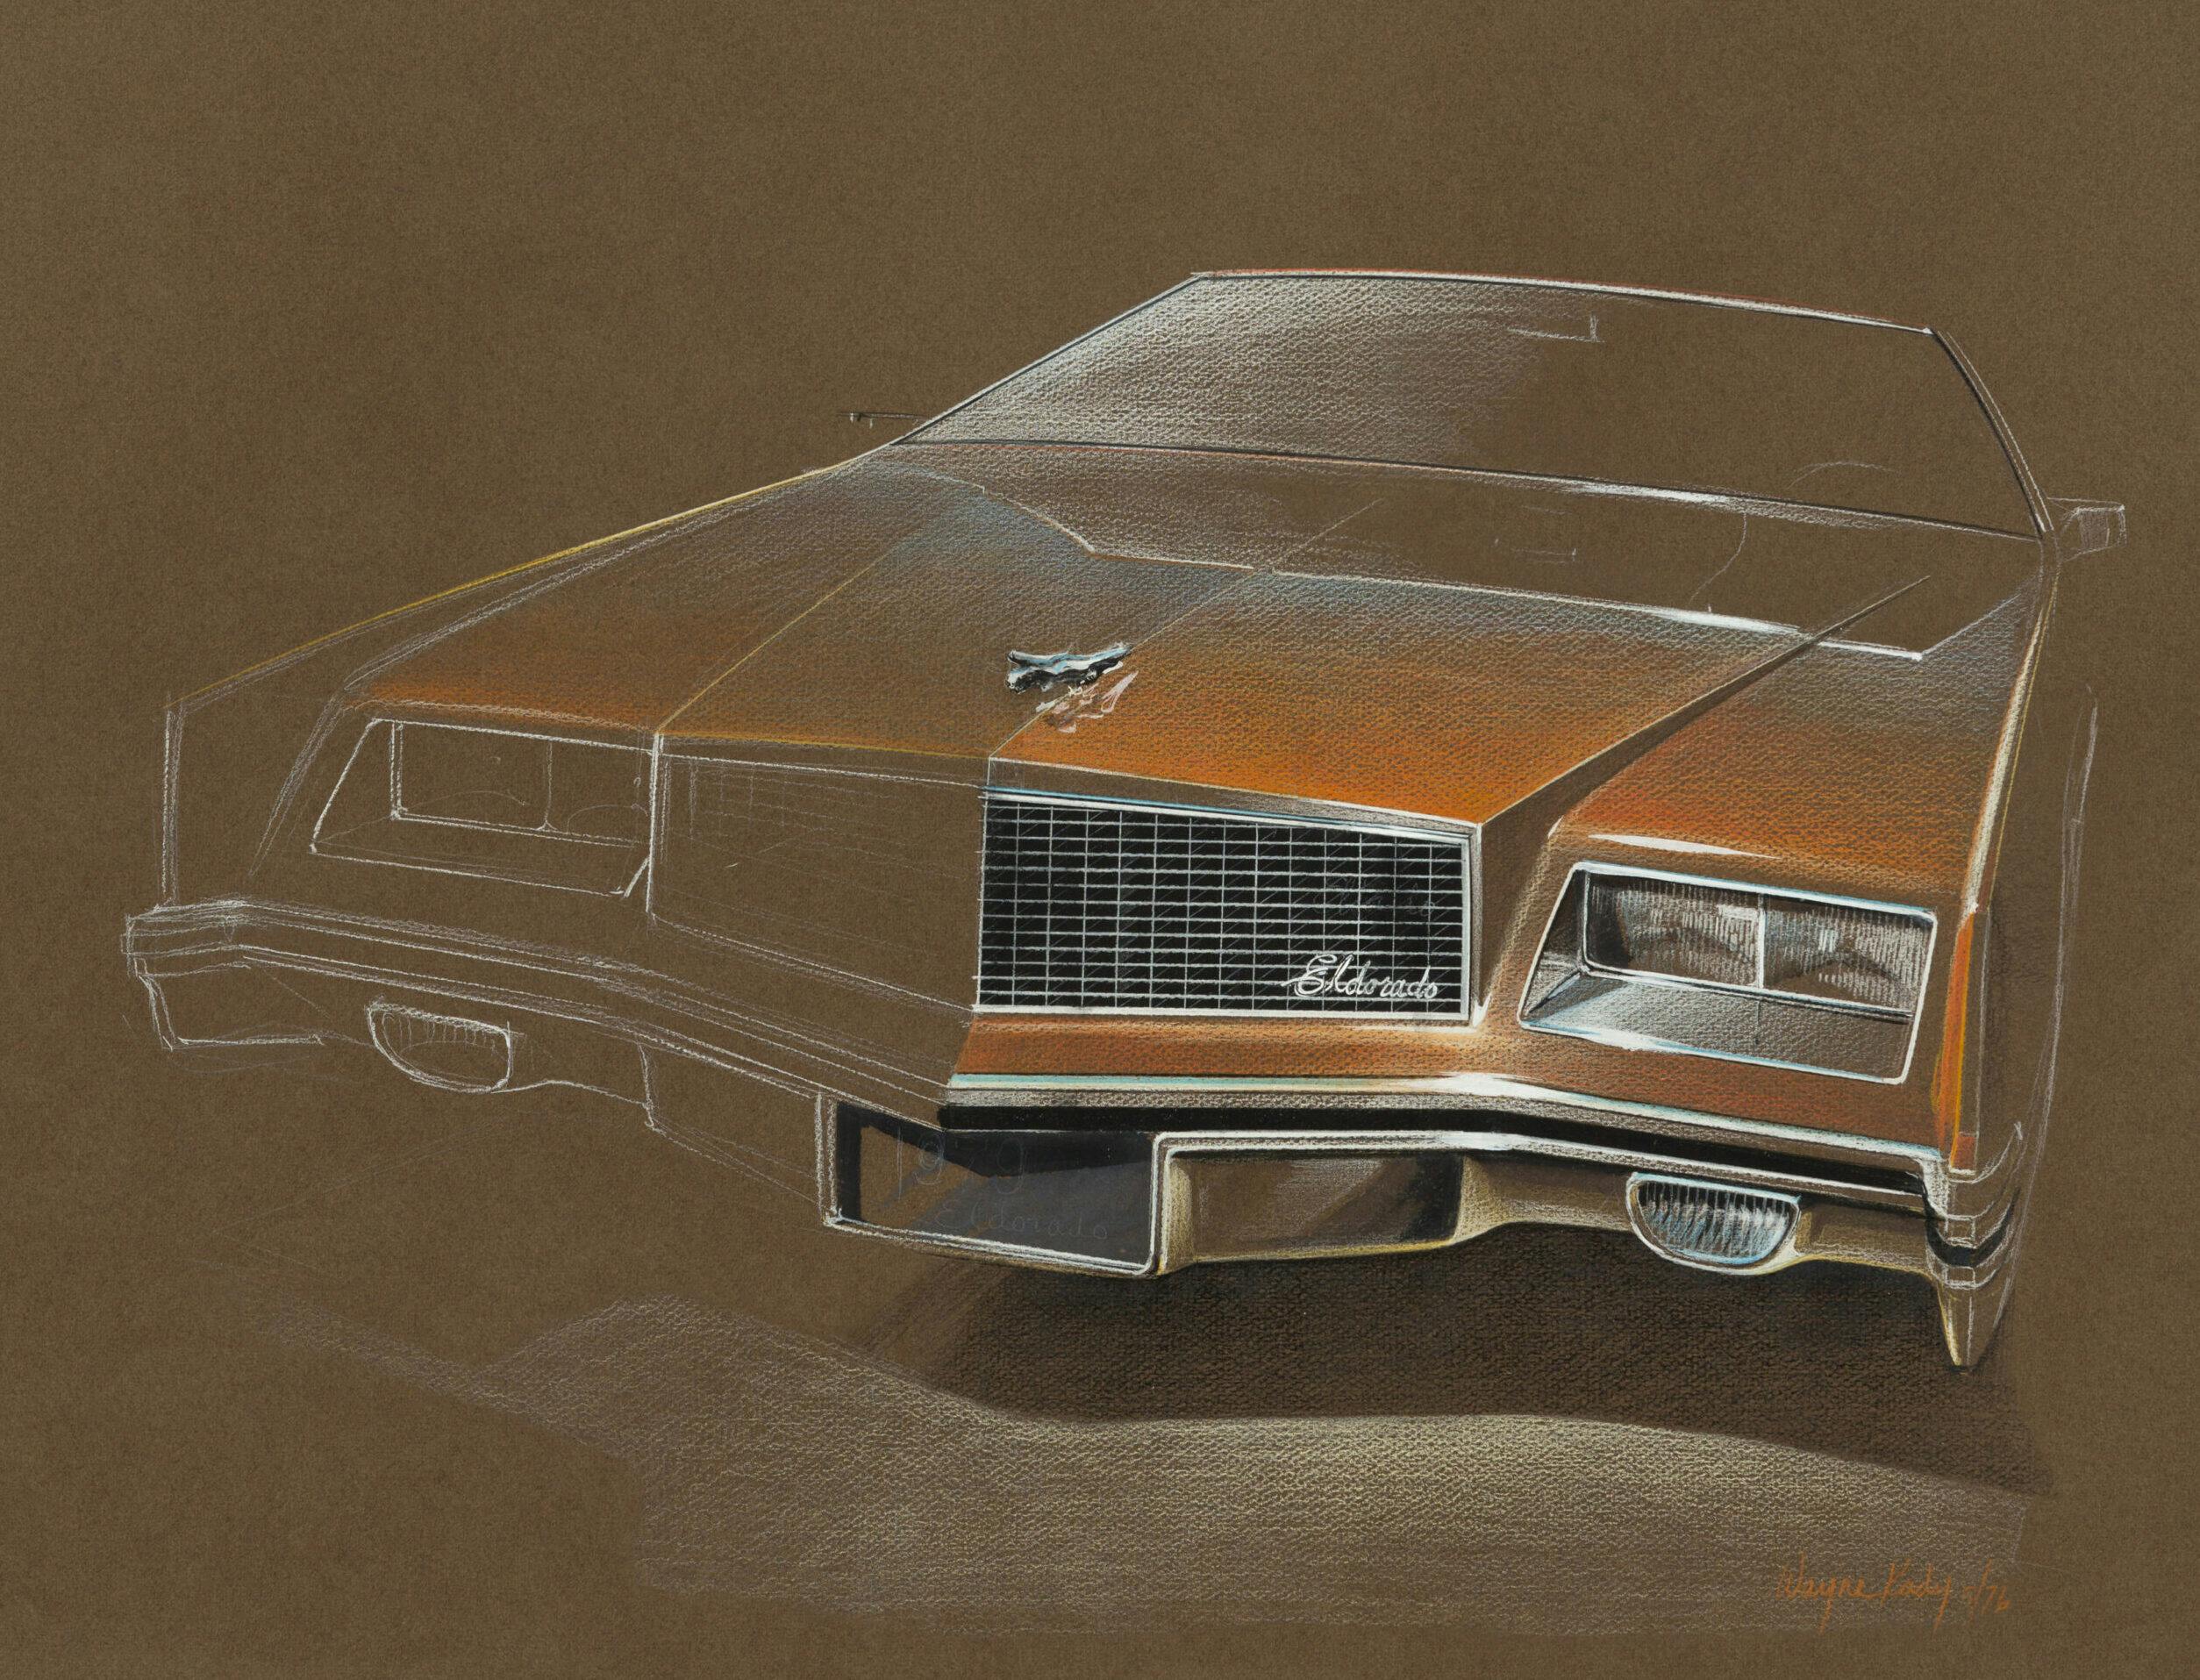 1979 Cadillac Eldorado illustration